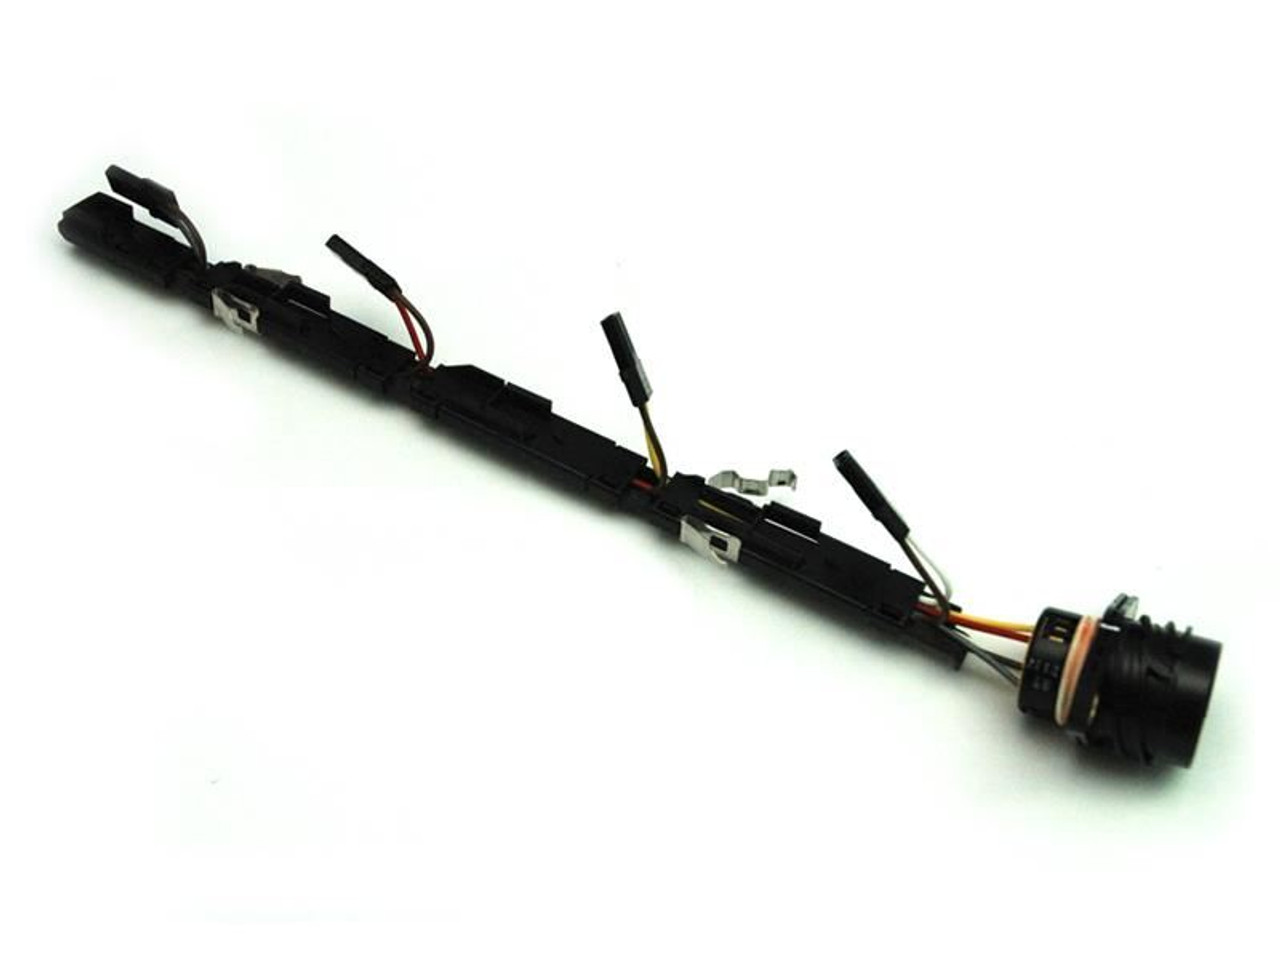 Adaptor cable set injection nozzle pump nozzle 038971600 SCSN 038 971 600